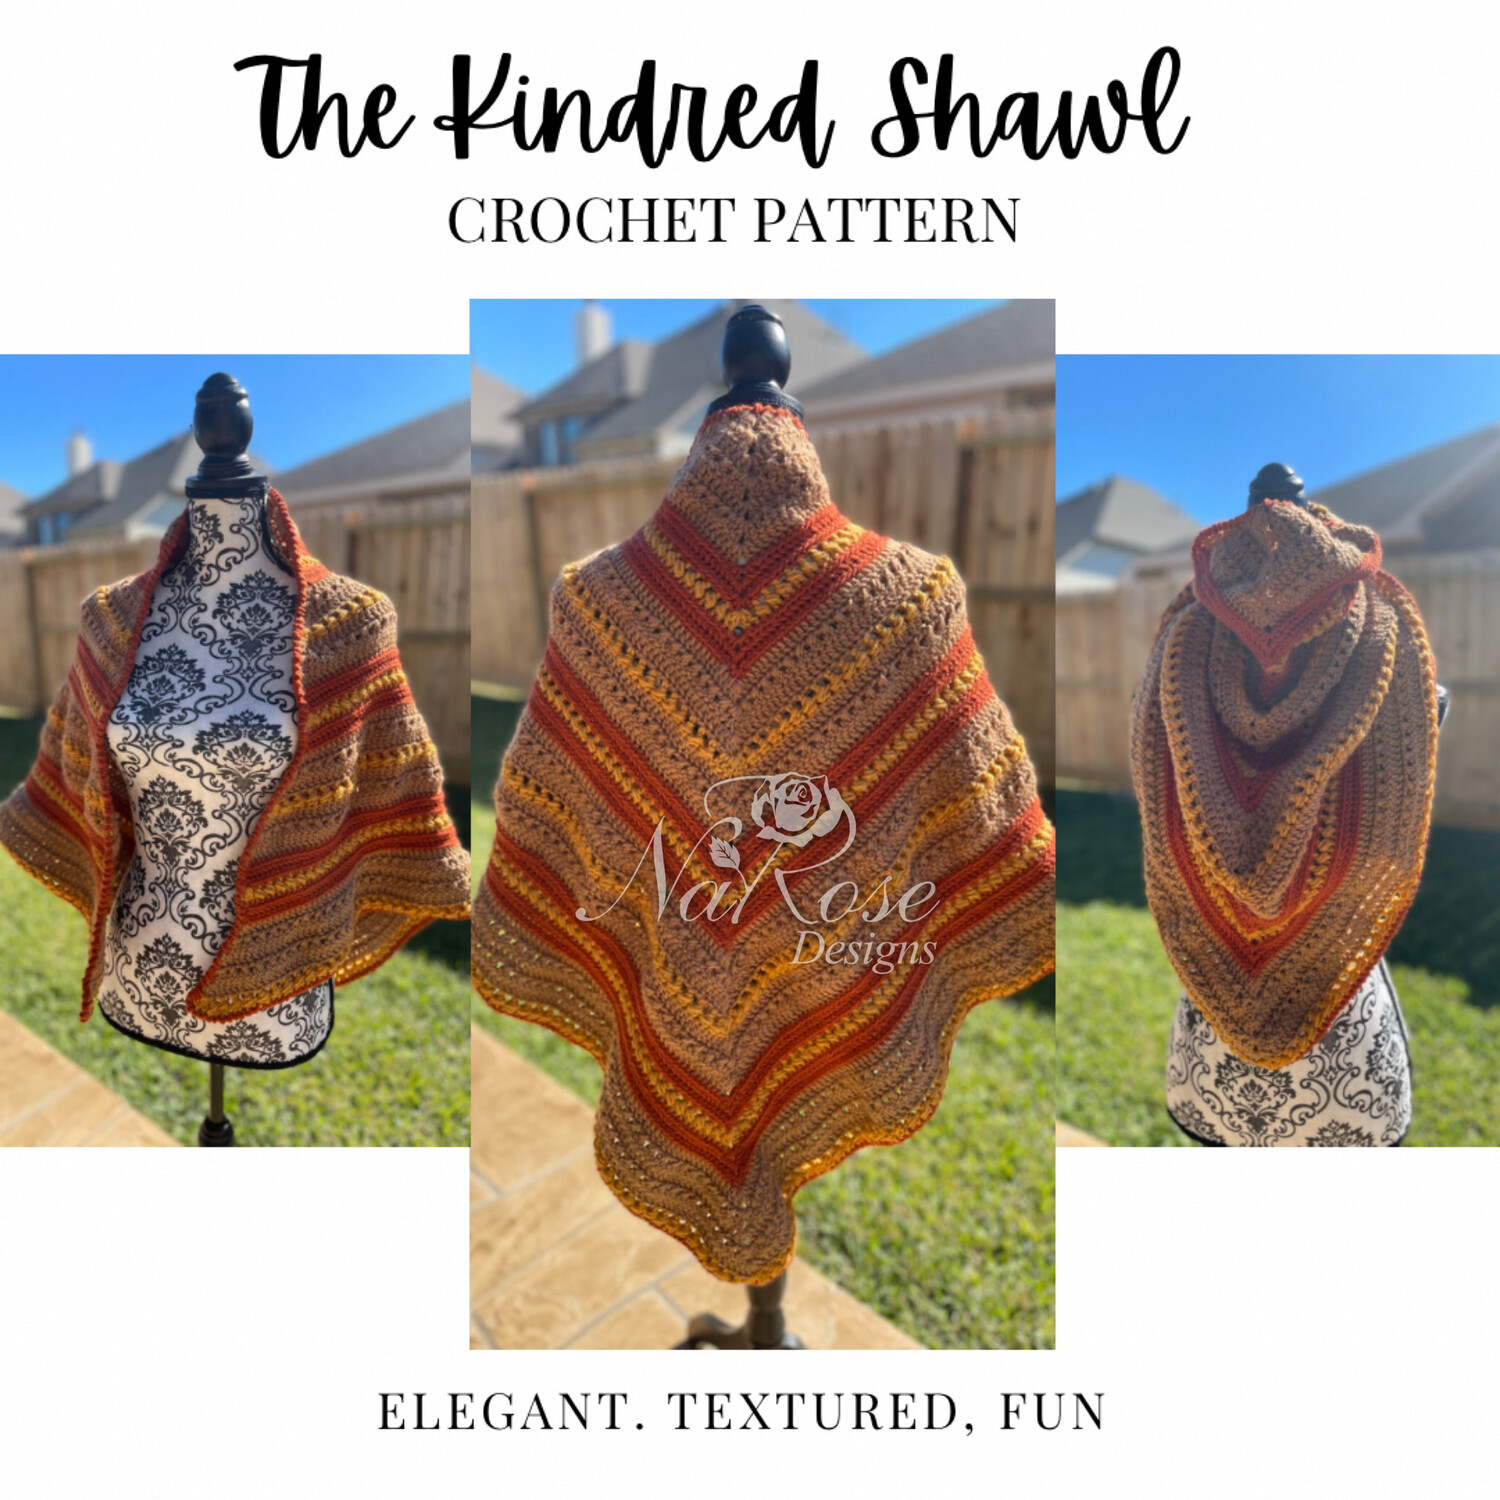 Kindred Shawl Crochet PATTERN